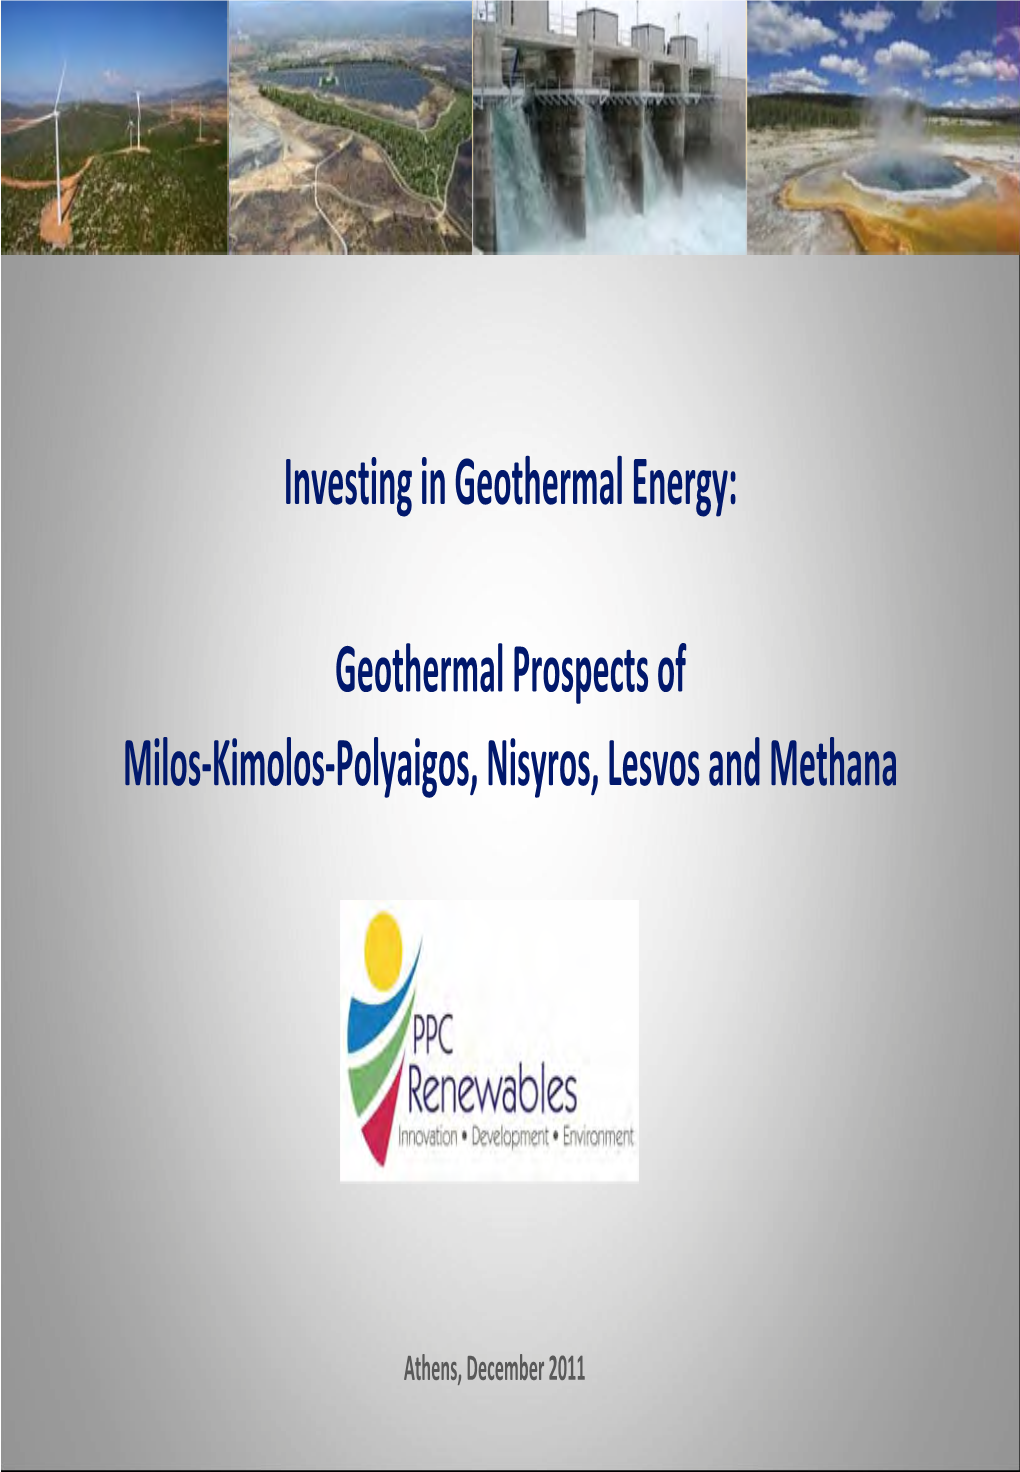 Geothermal Prospects of Milos-Kimolos-Polyaigos, Nisyros